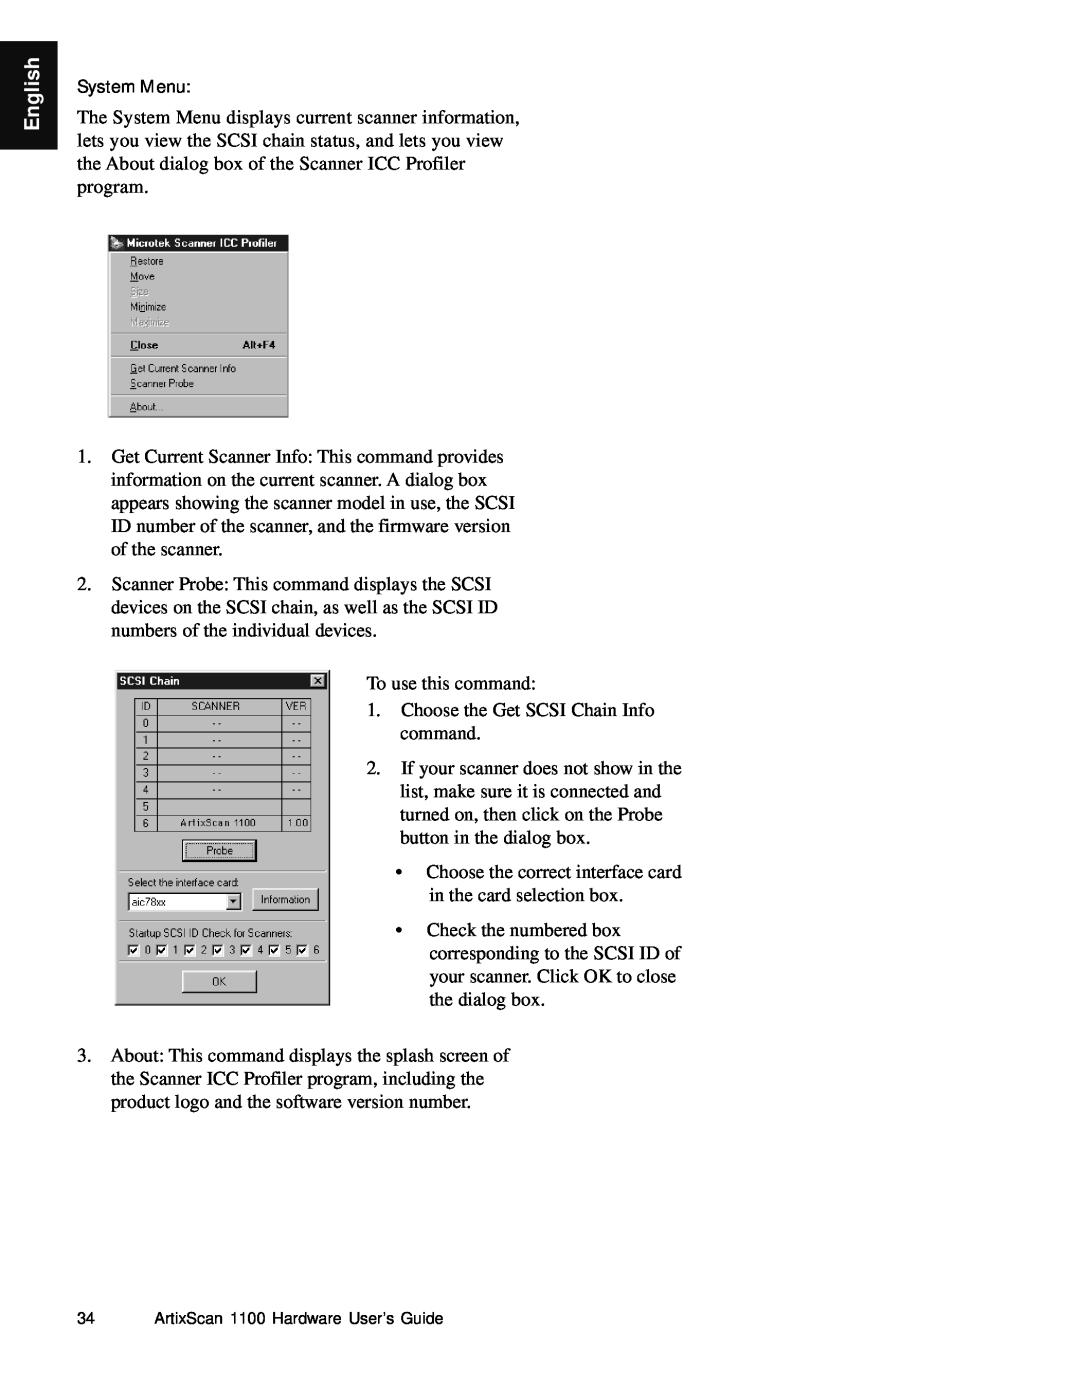 Microtek Artix Scan1100 manual English, System Menu, ArtixScan 1100 Hardware User’s Guide 